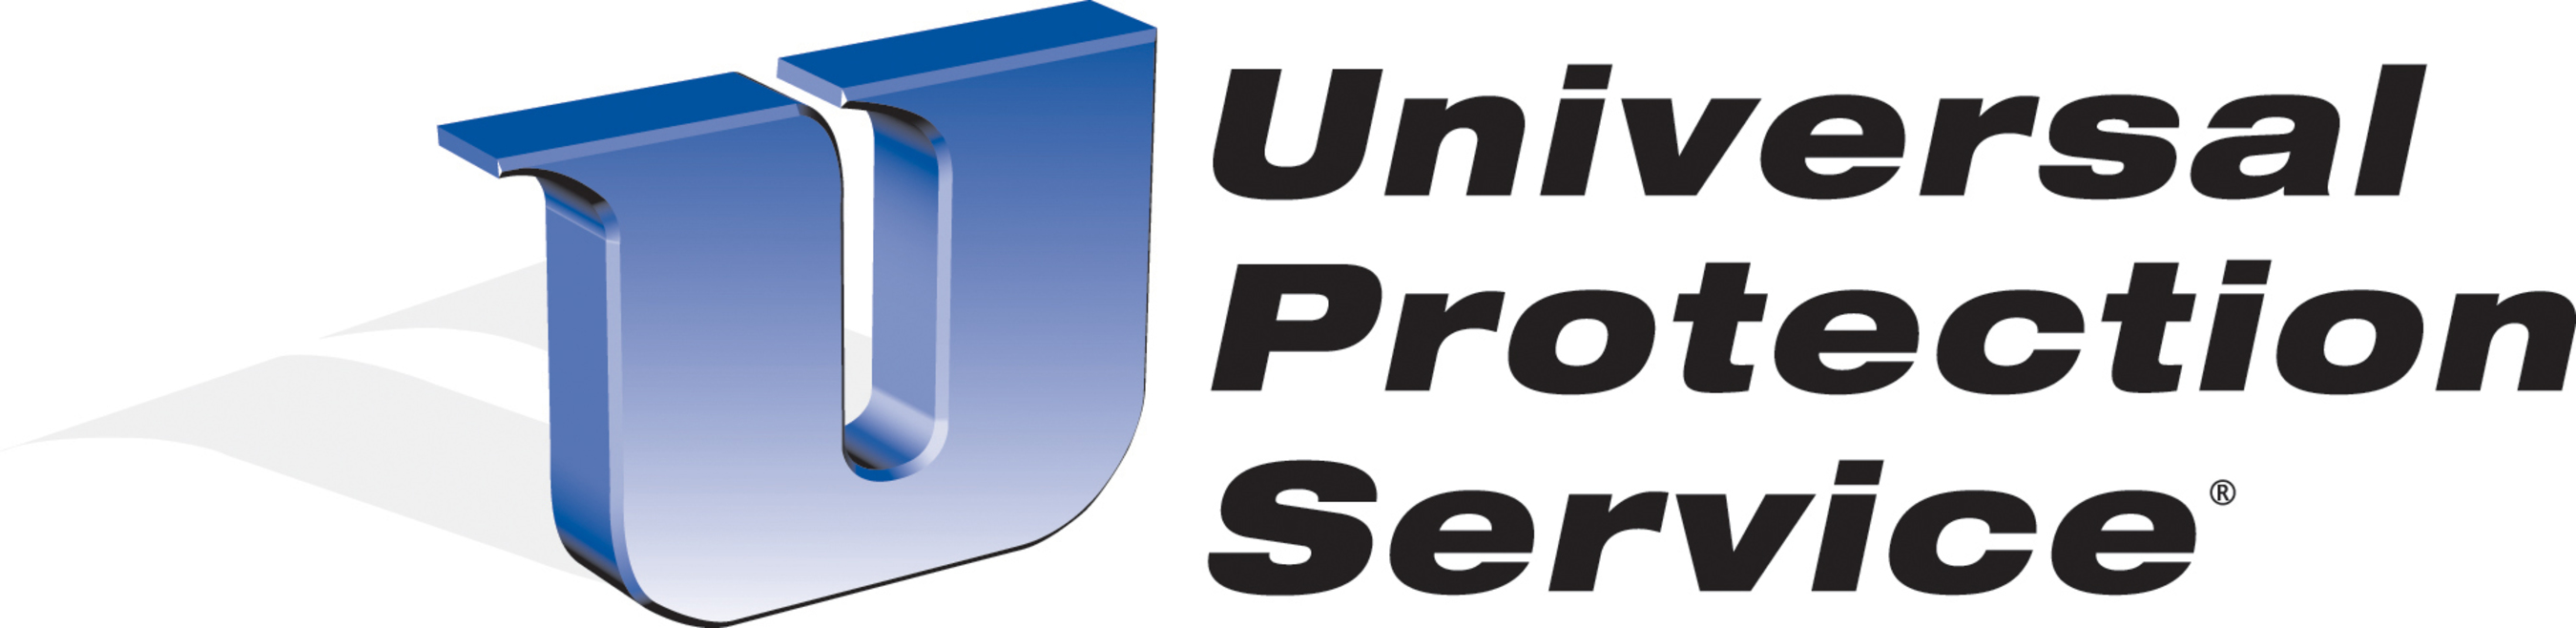 Universal Protection Service logo.